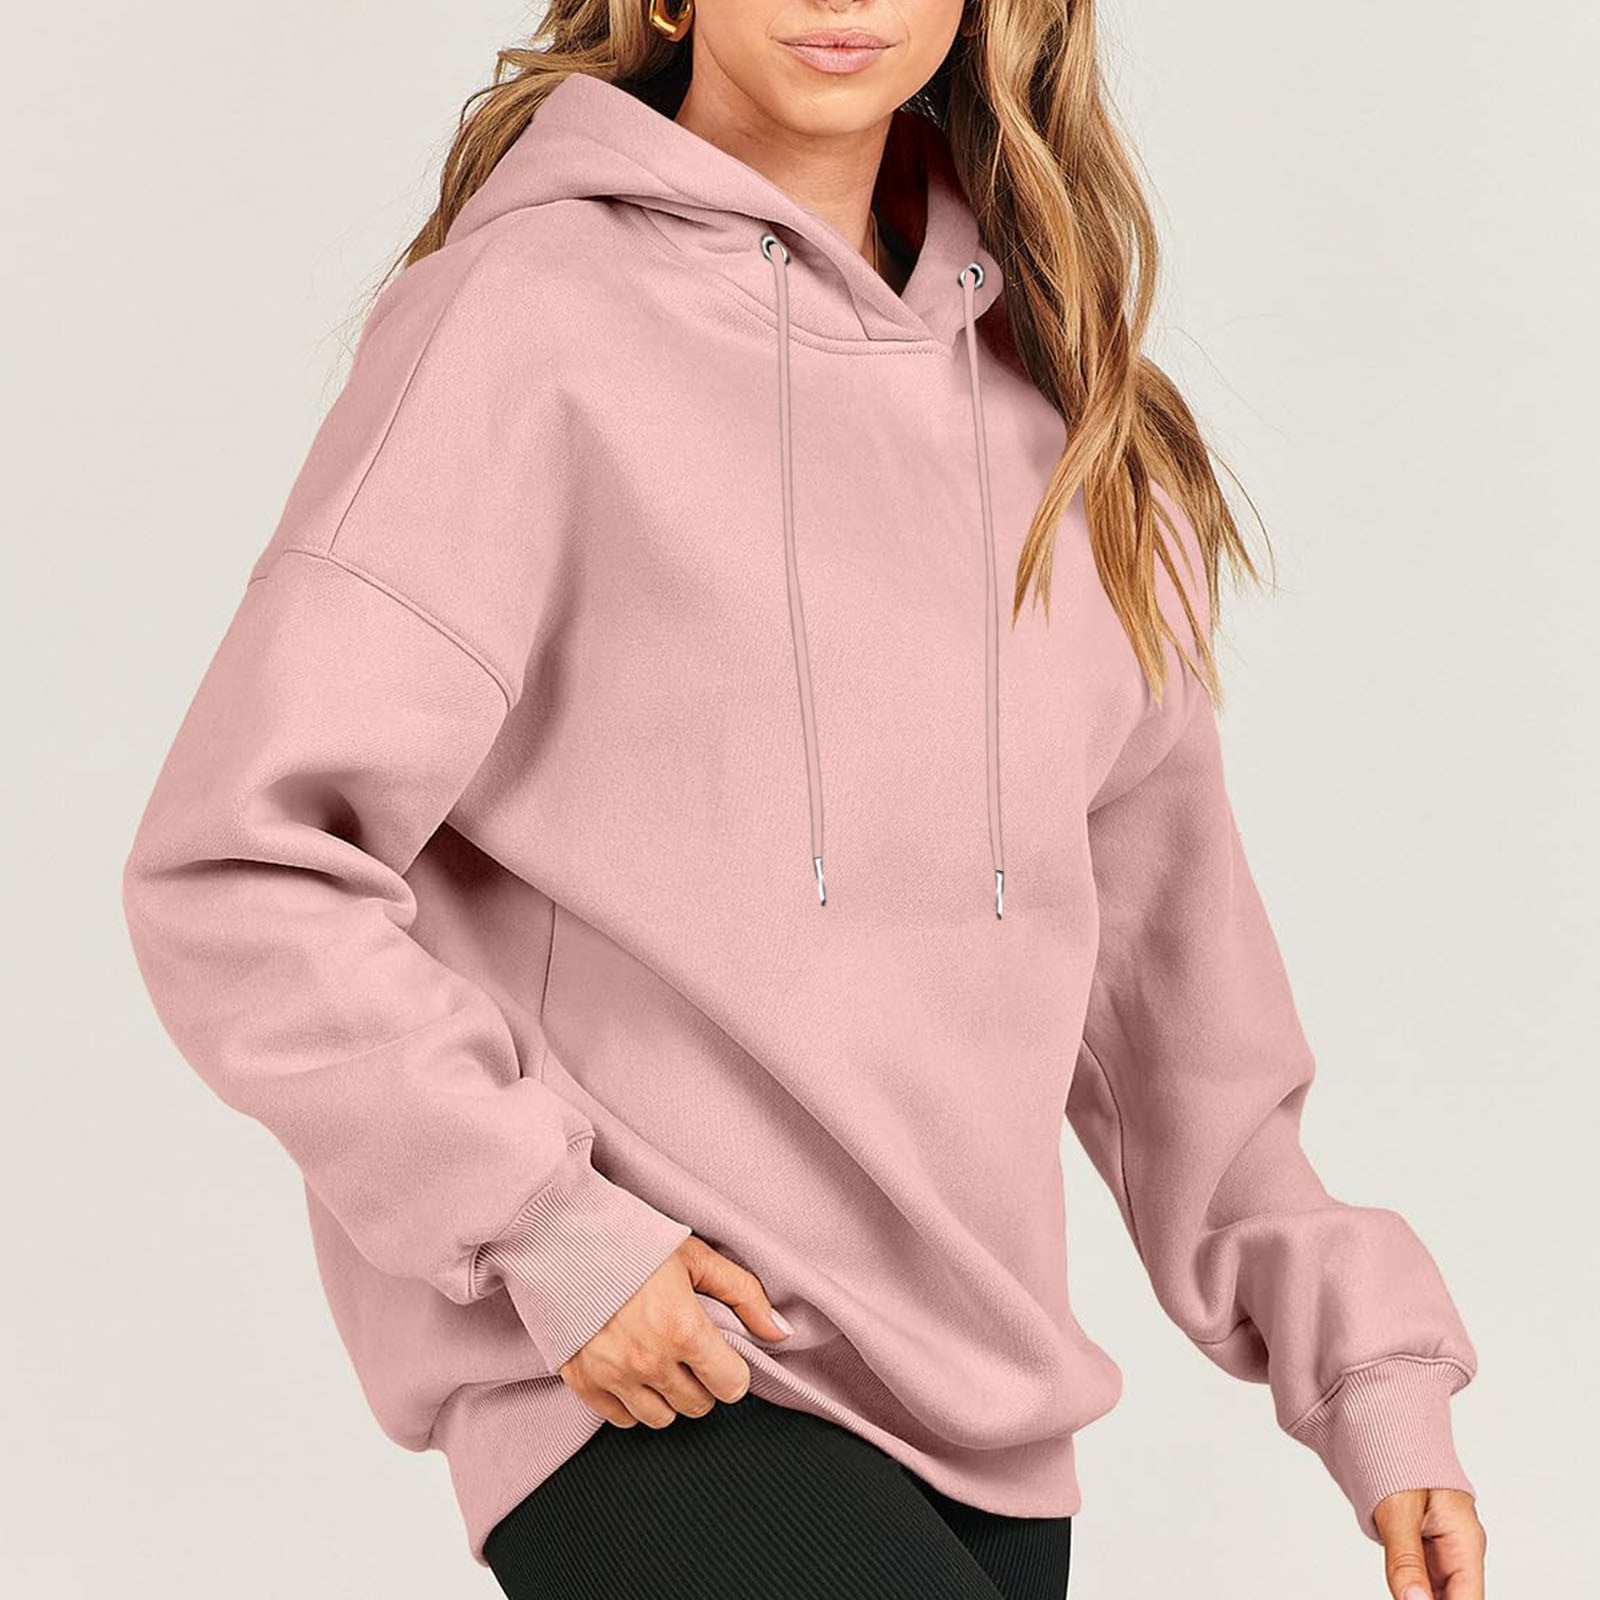 Best Deal for Kiosan Women'S Fashion Hoodies & Sweatshirts Oversized